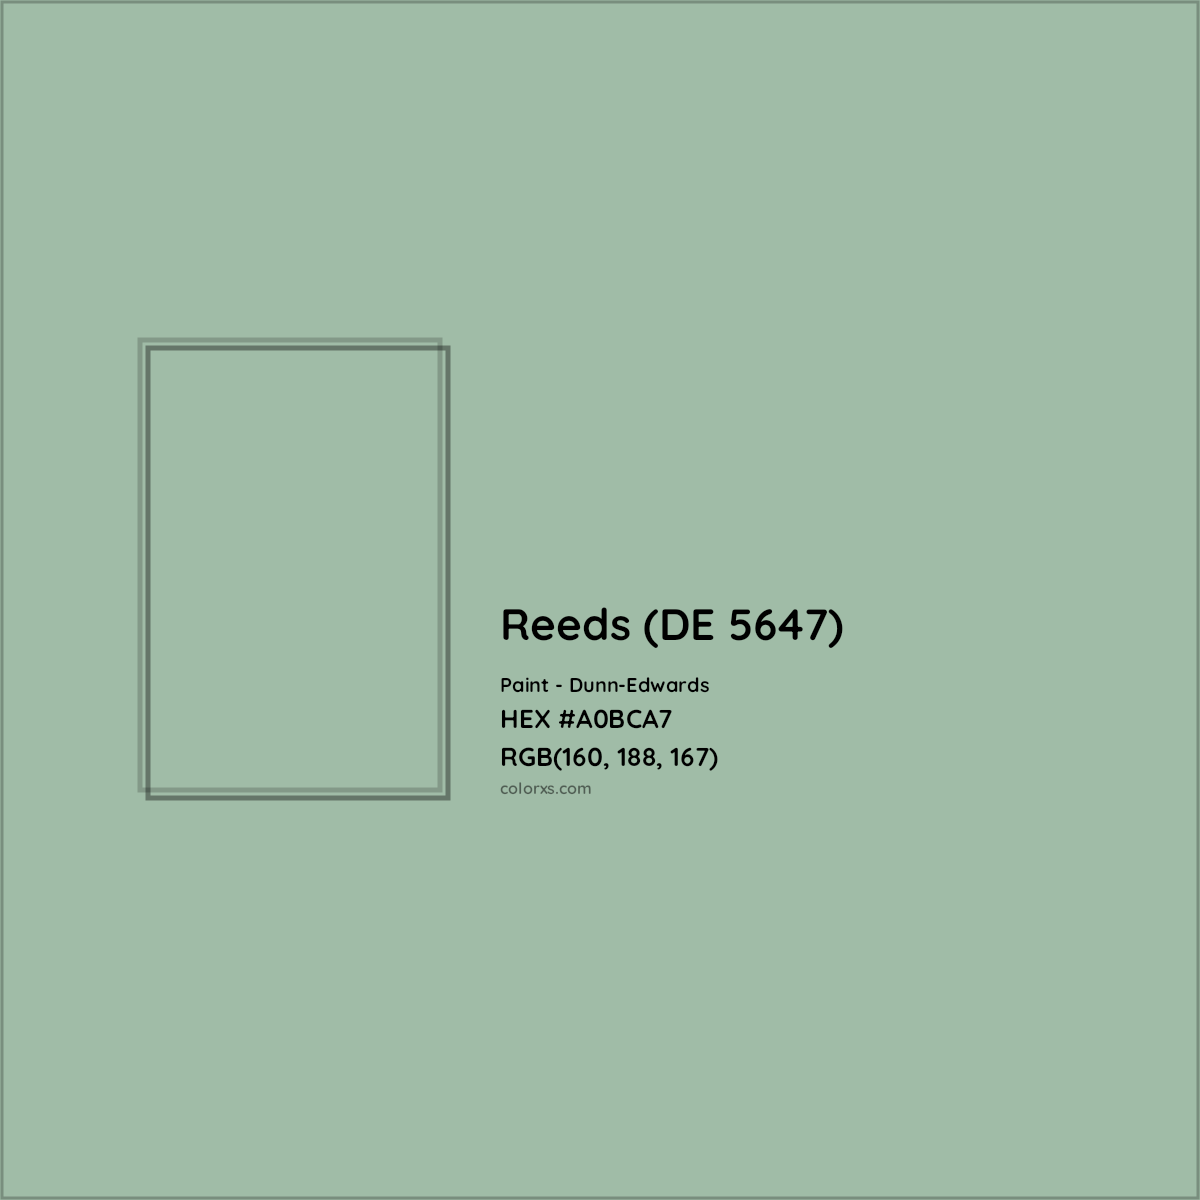 HEX #A0BCA7 Reeds (DE 5647) Paint Dunn-Edwards - Color Code